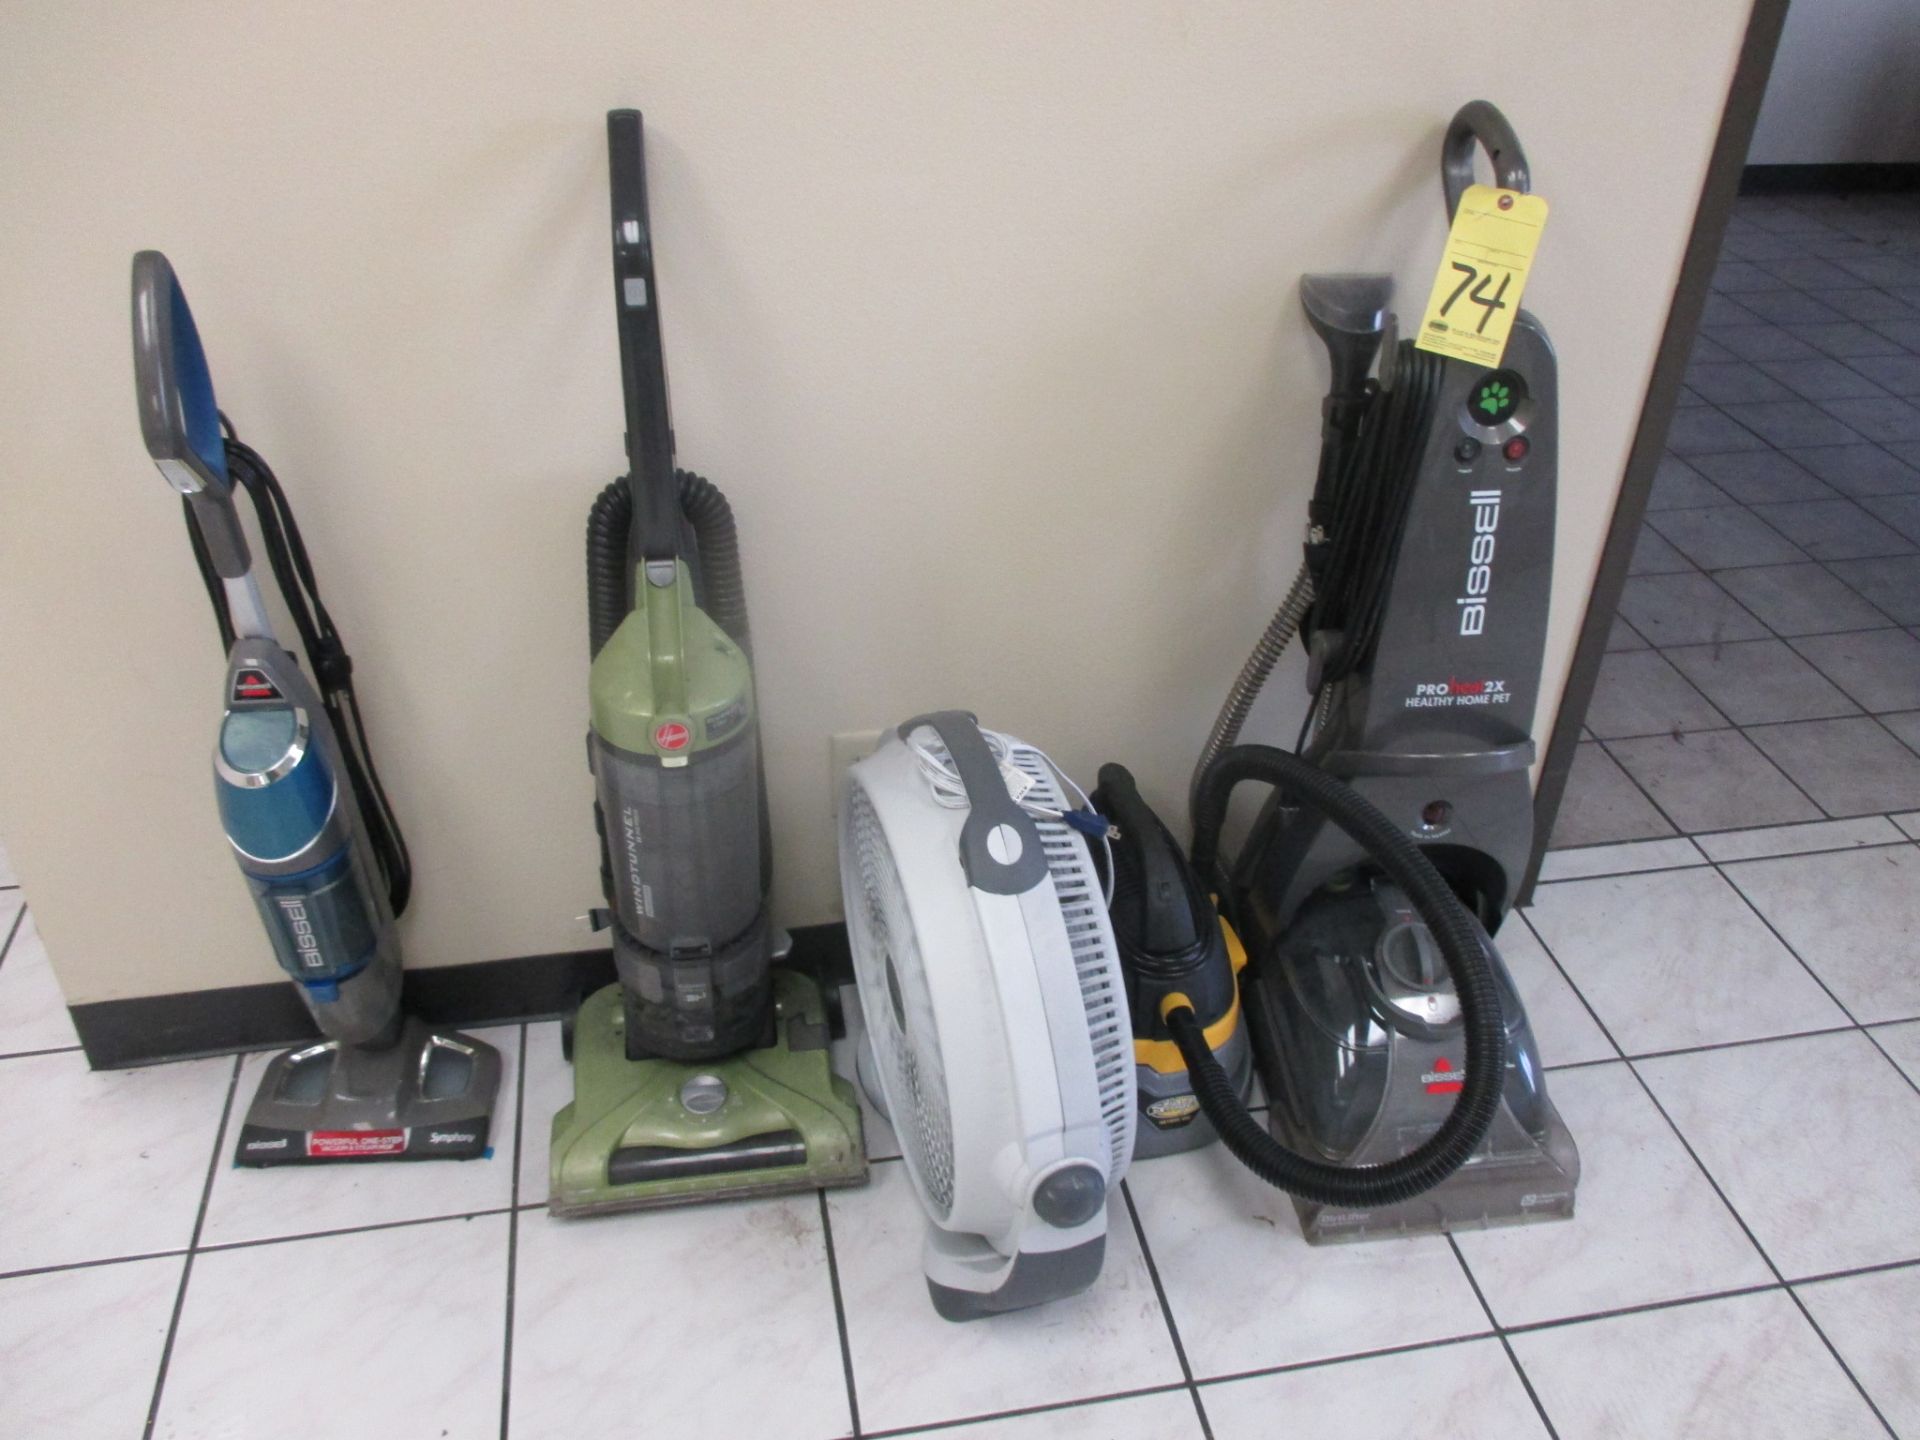 LOT CONSISTING OF: vacuums & carper cleaner